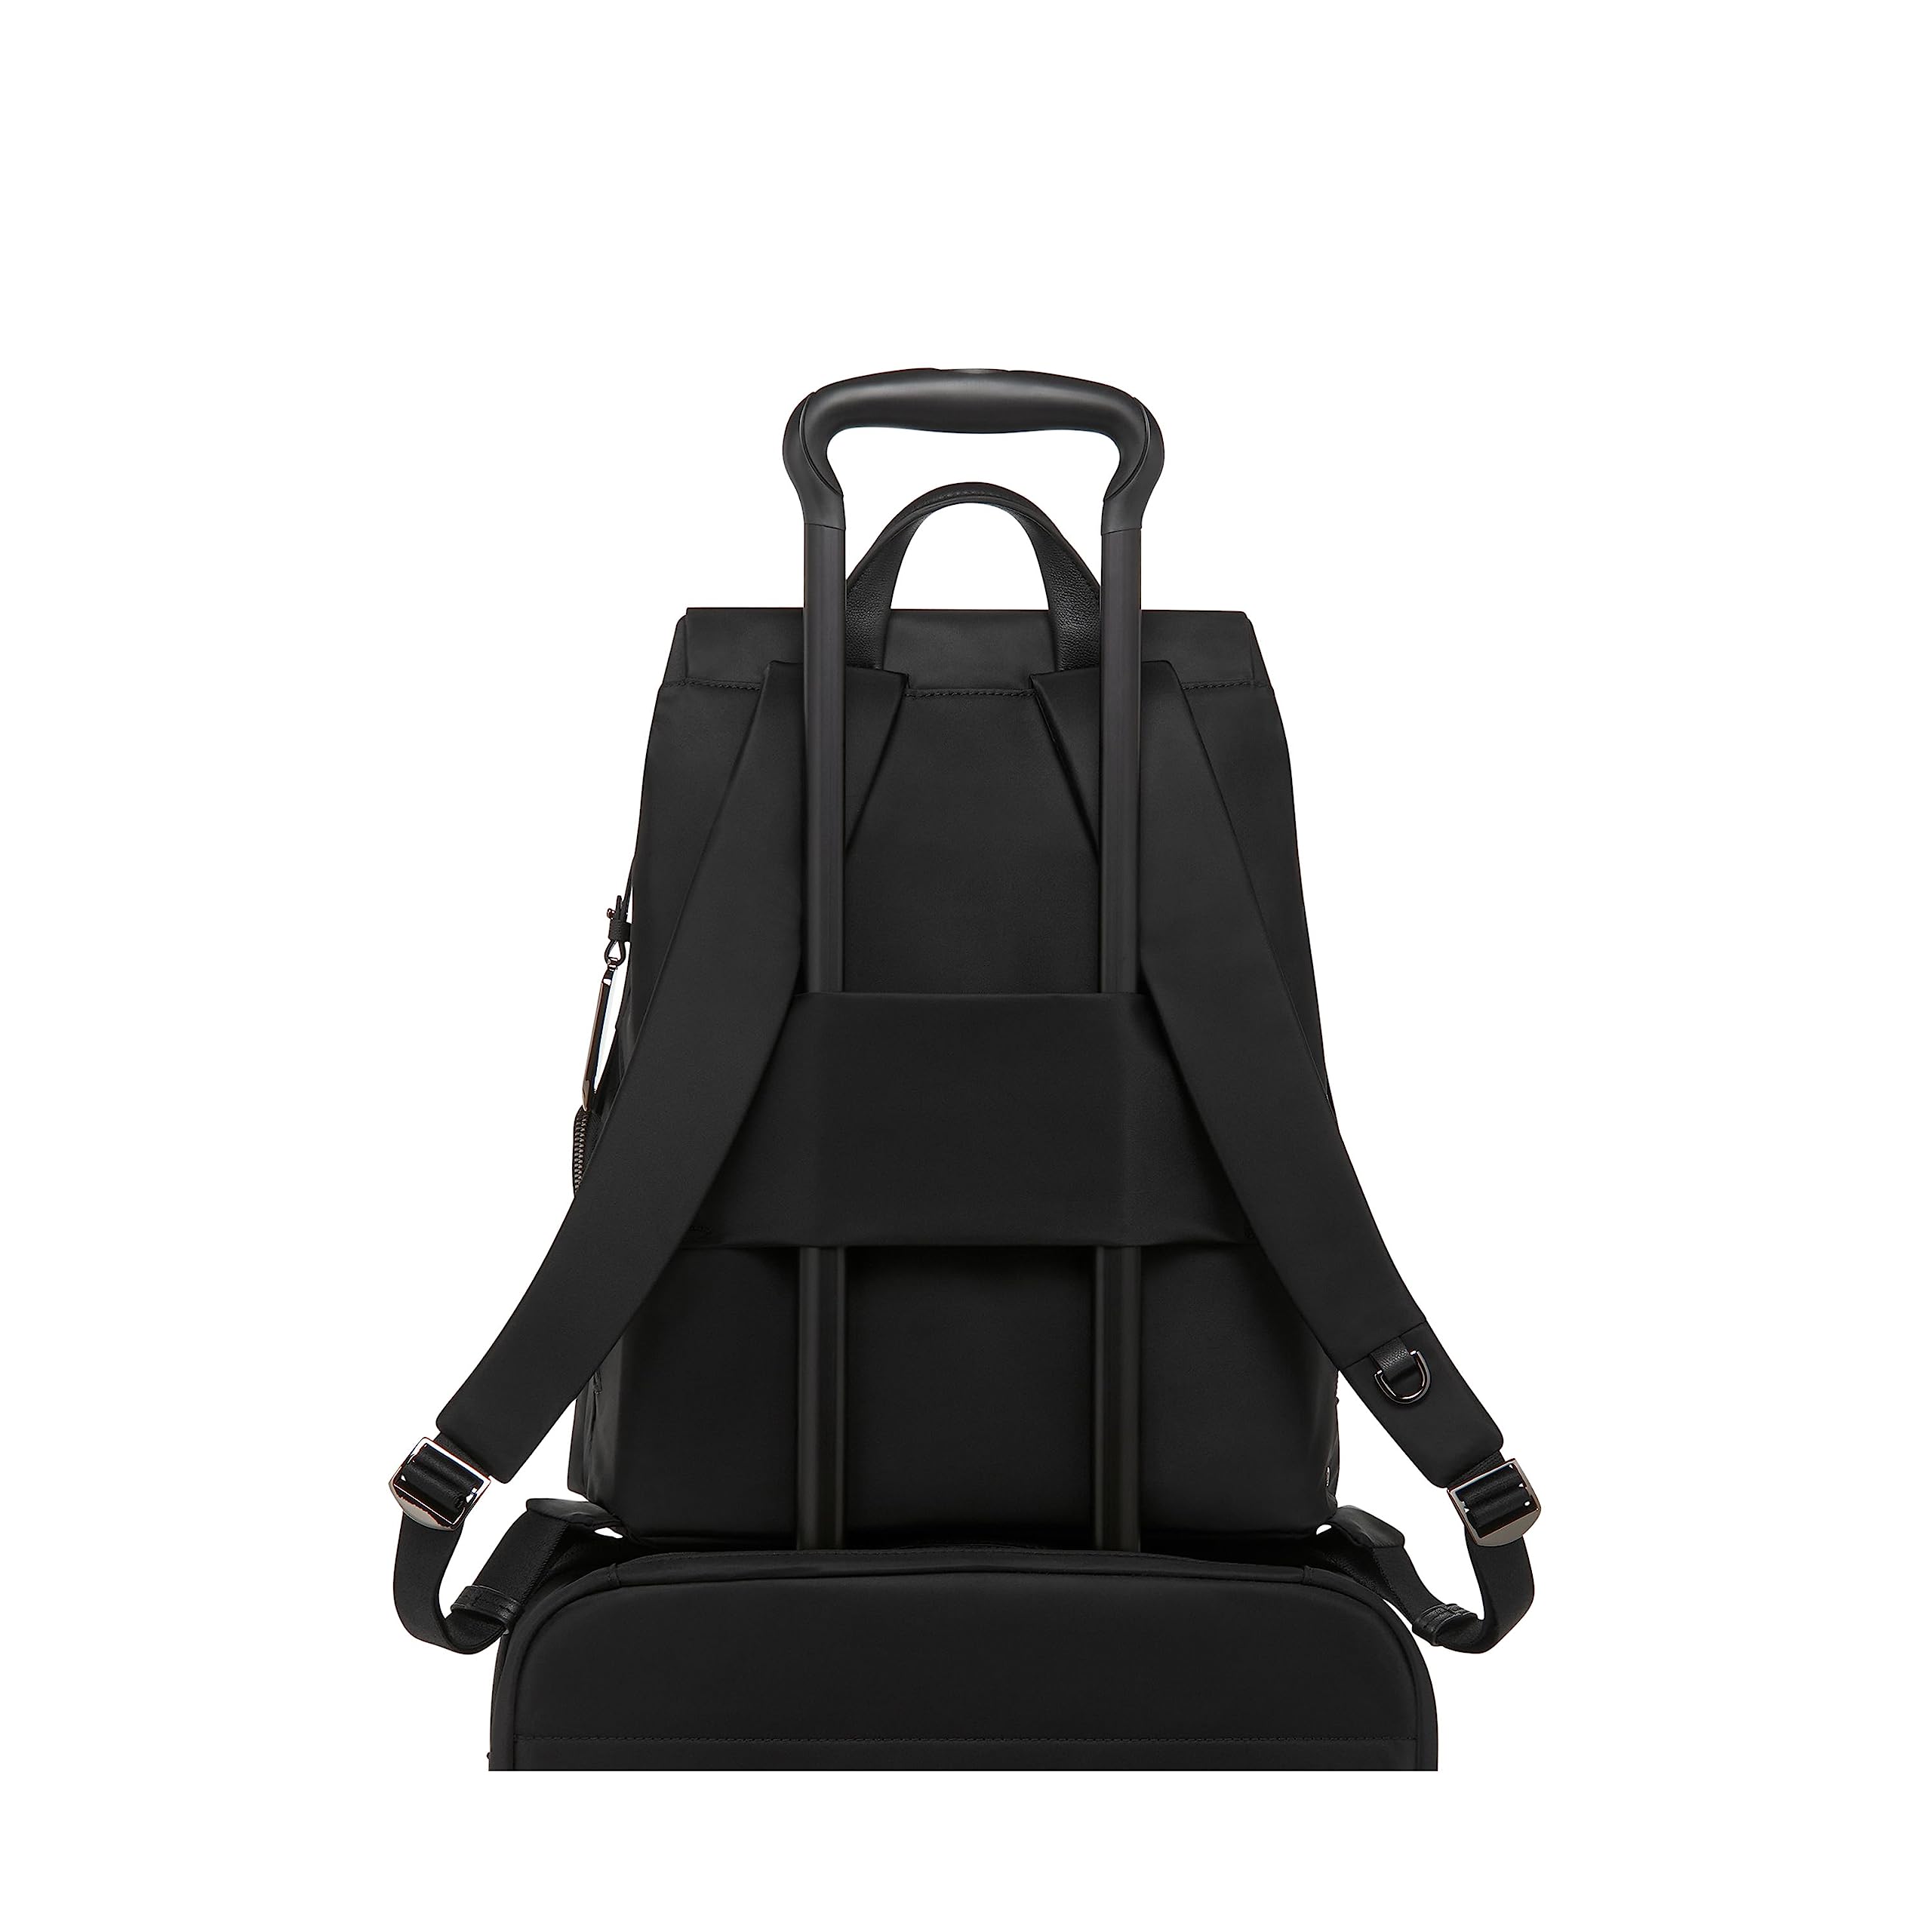 TUMI - Voyageur Ramsay Backpack for Women - Black/Gunmetal